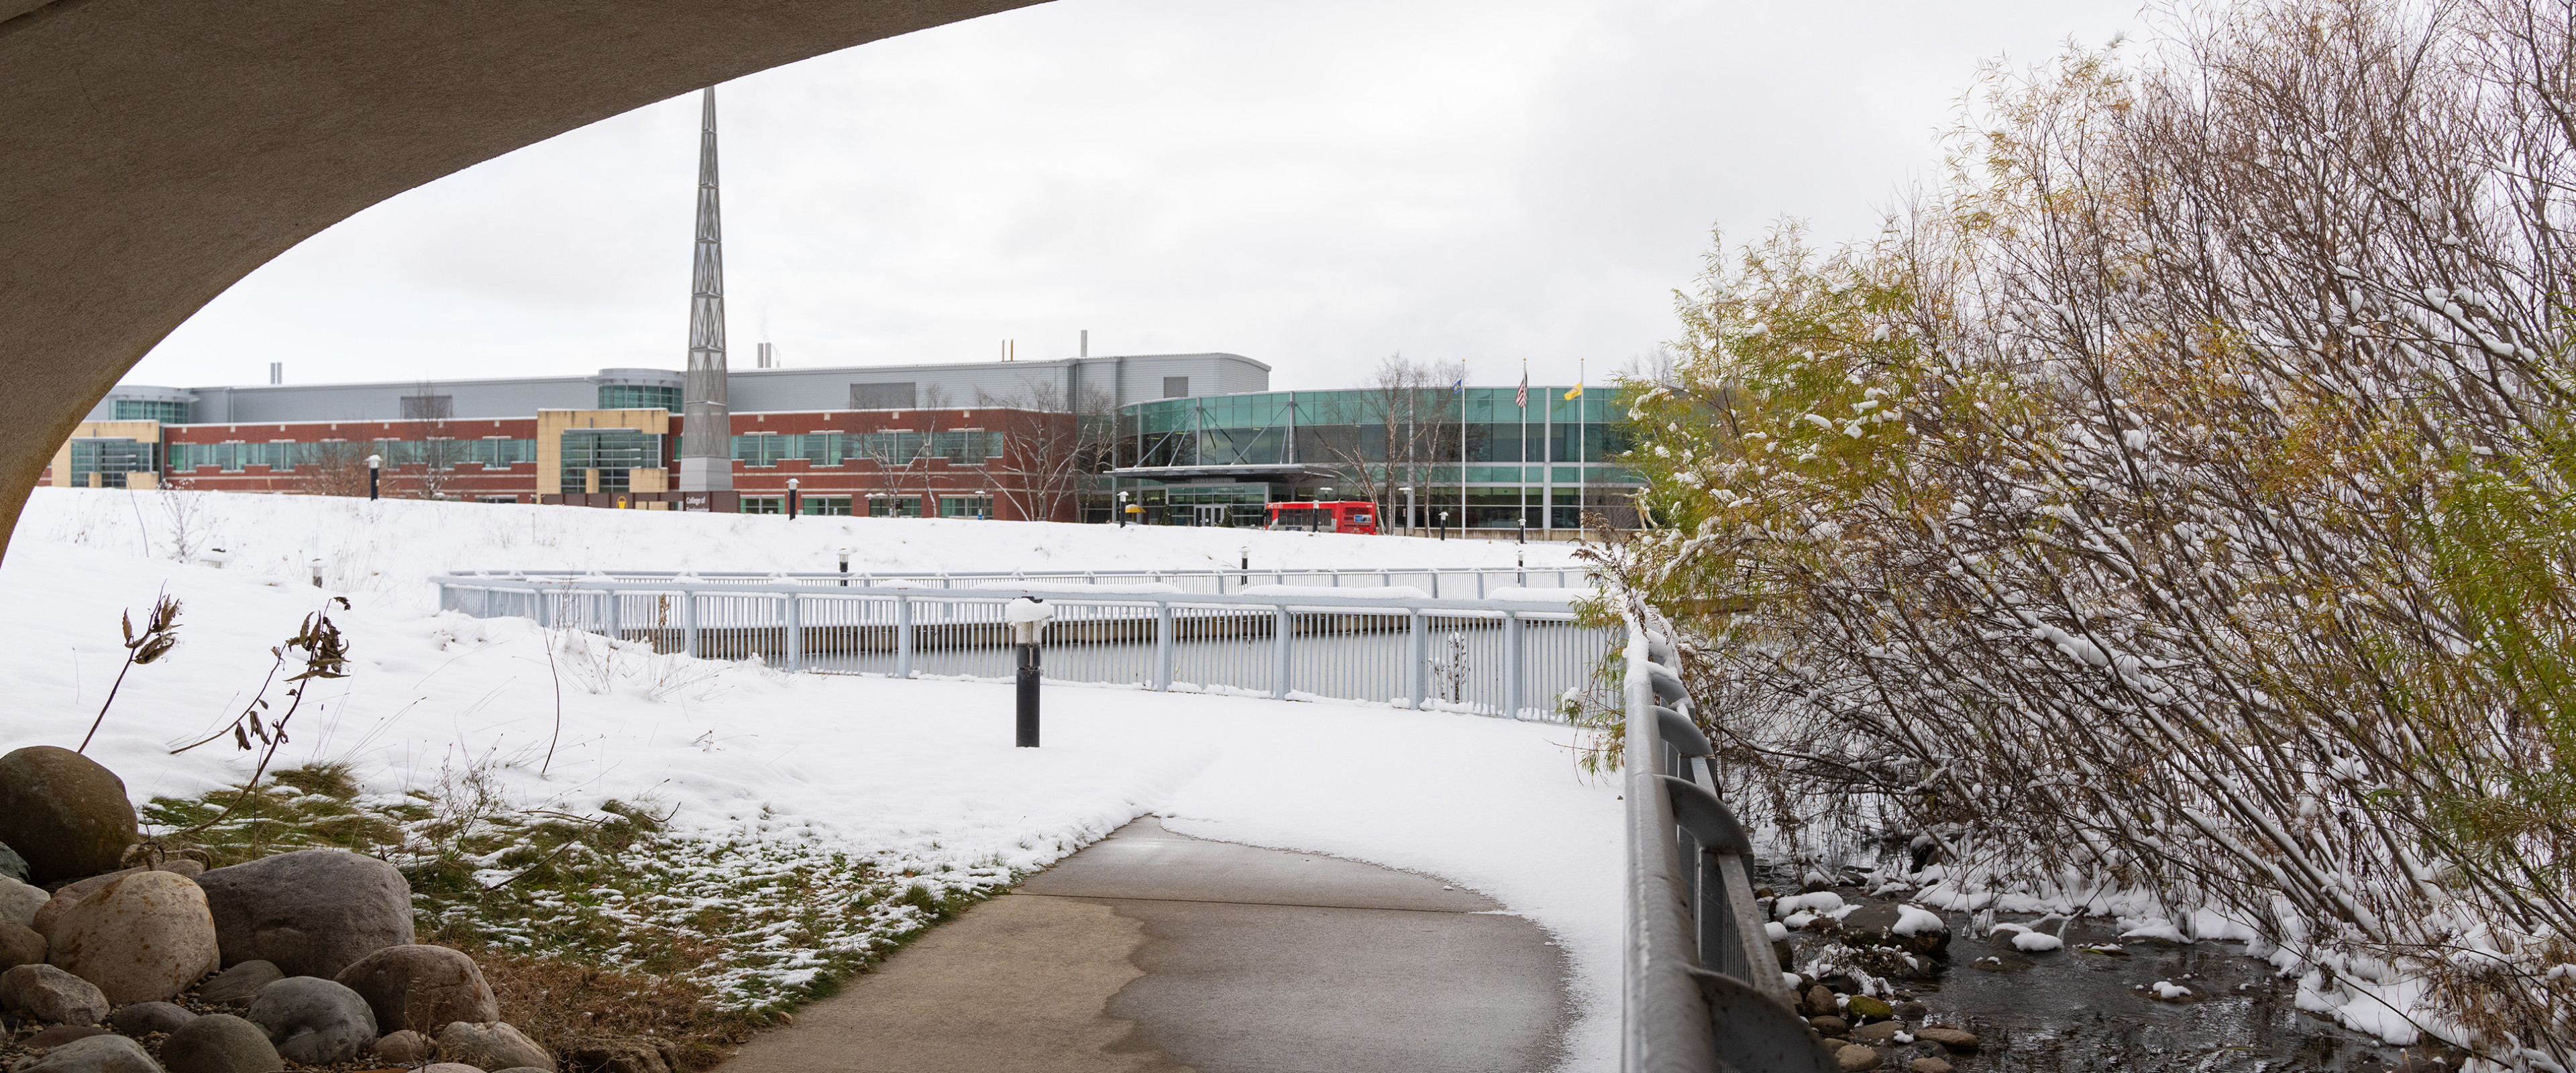 Snowy scene of Floyd Hall